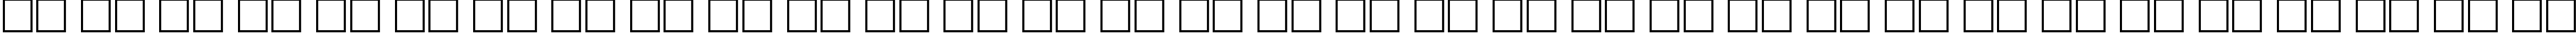 Пример написания русского алфавита шрифтом NTHarmonica Bold70b